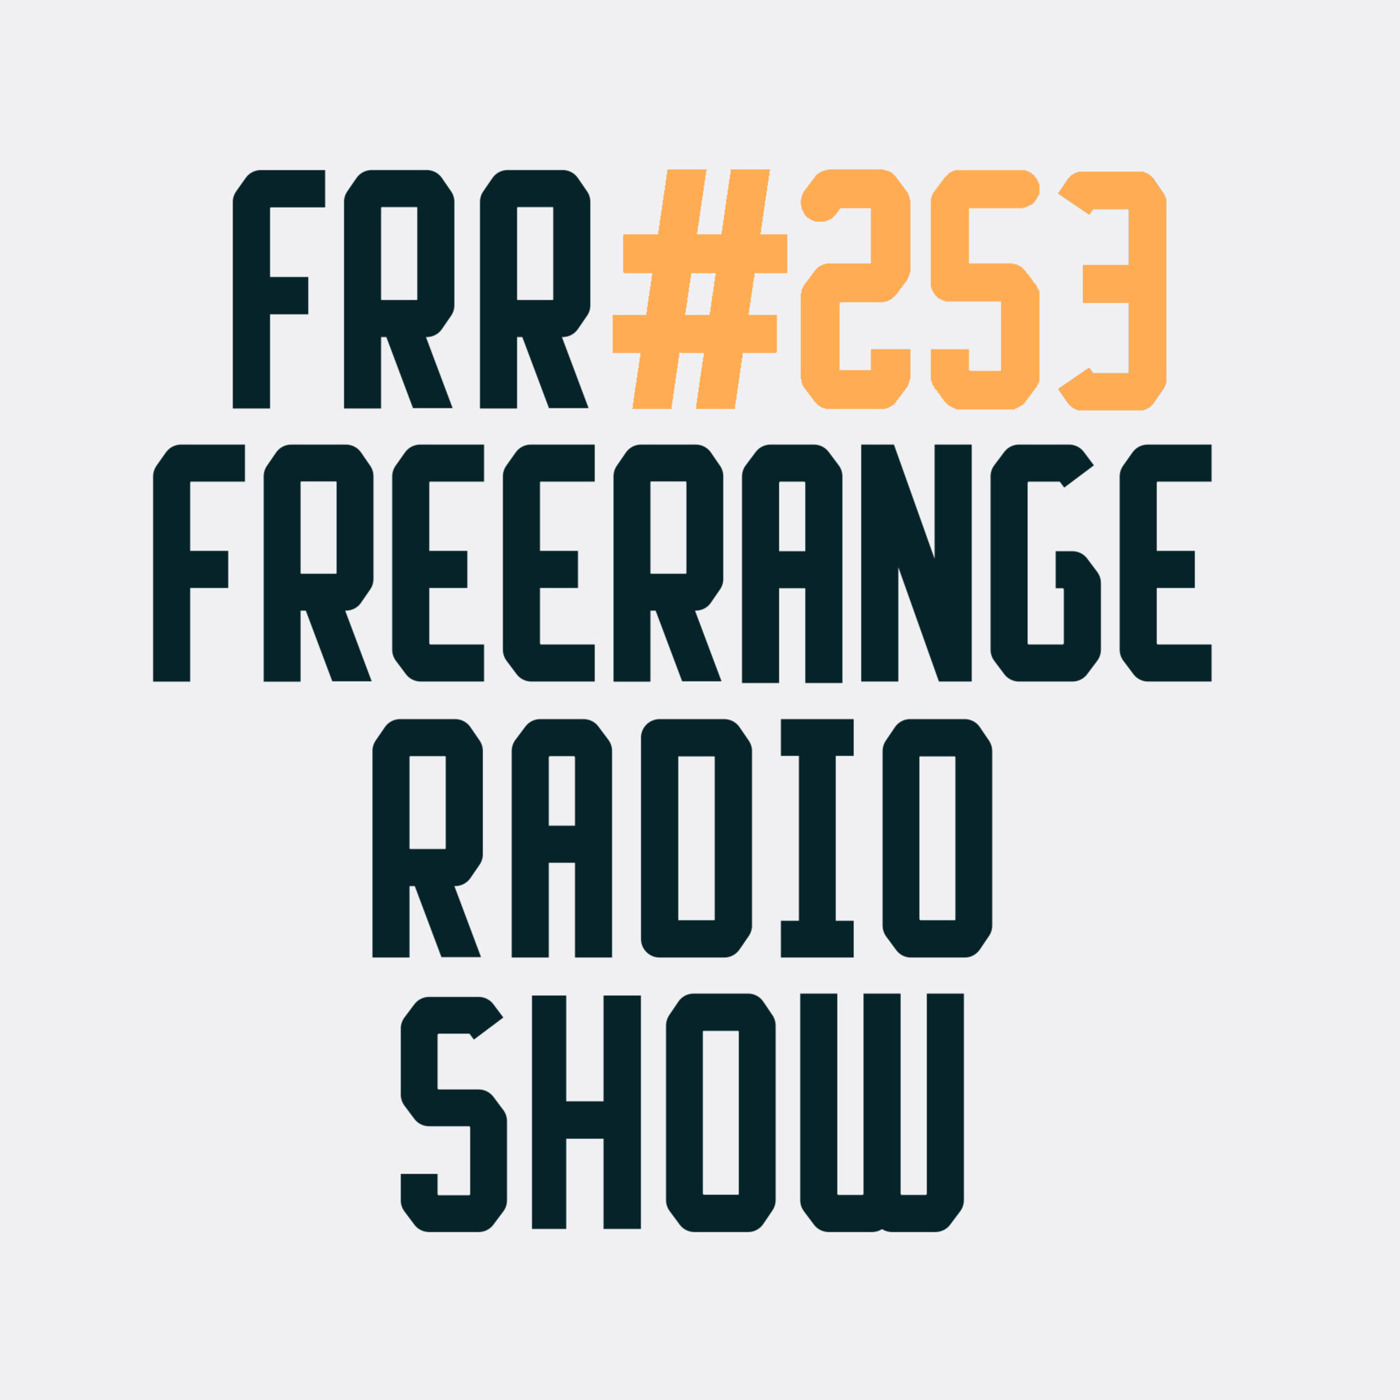 Episode 253: Freerange Records Radioshow No.253 - October 2022 With Matt Masters